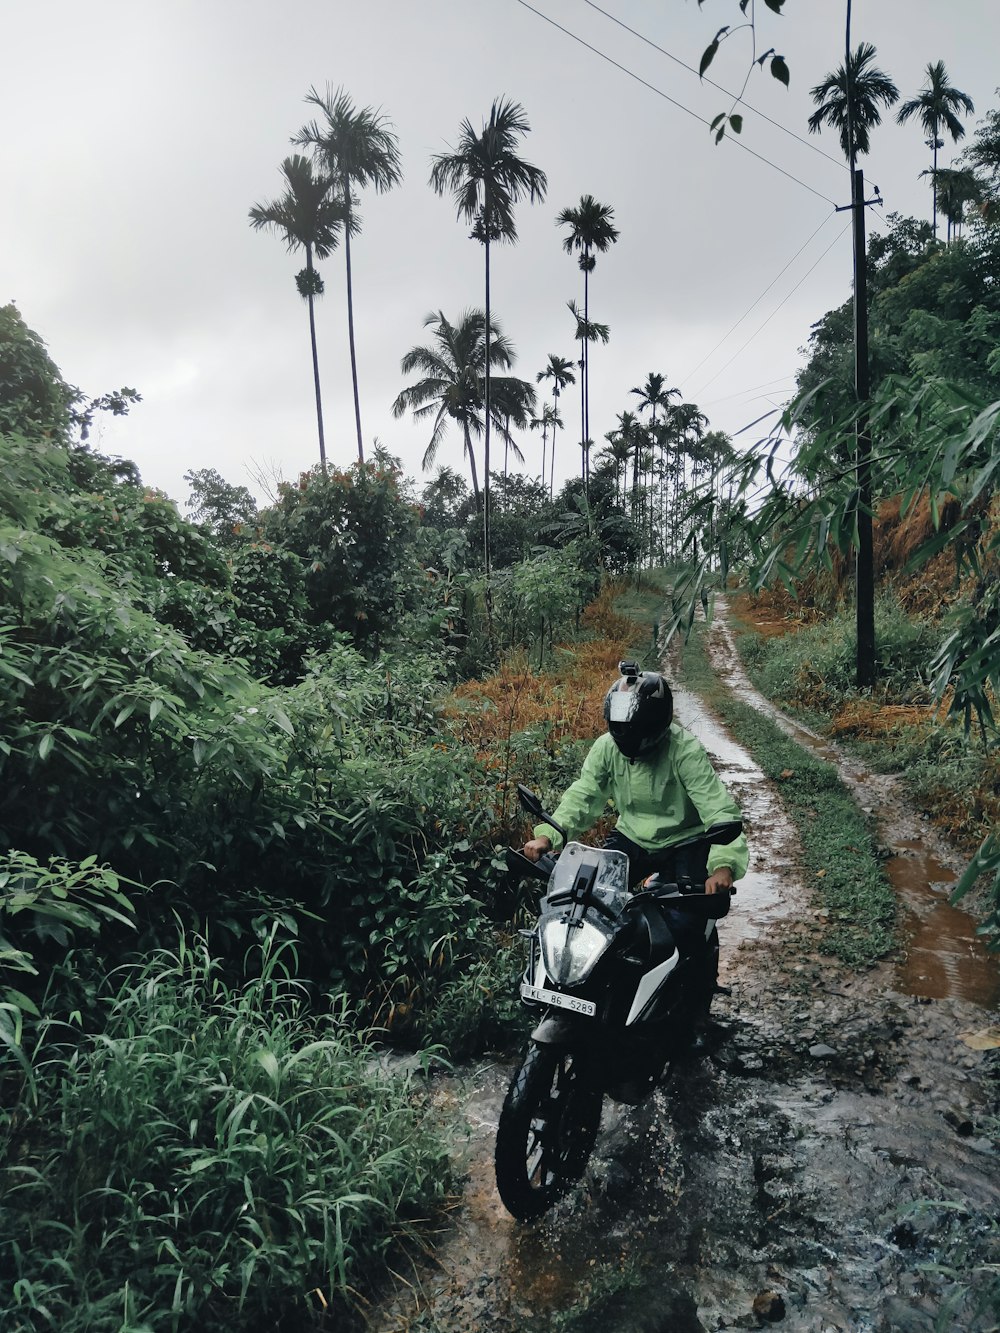 man in black jacket riding motorcycle on dirt road during daytime